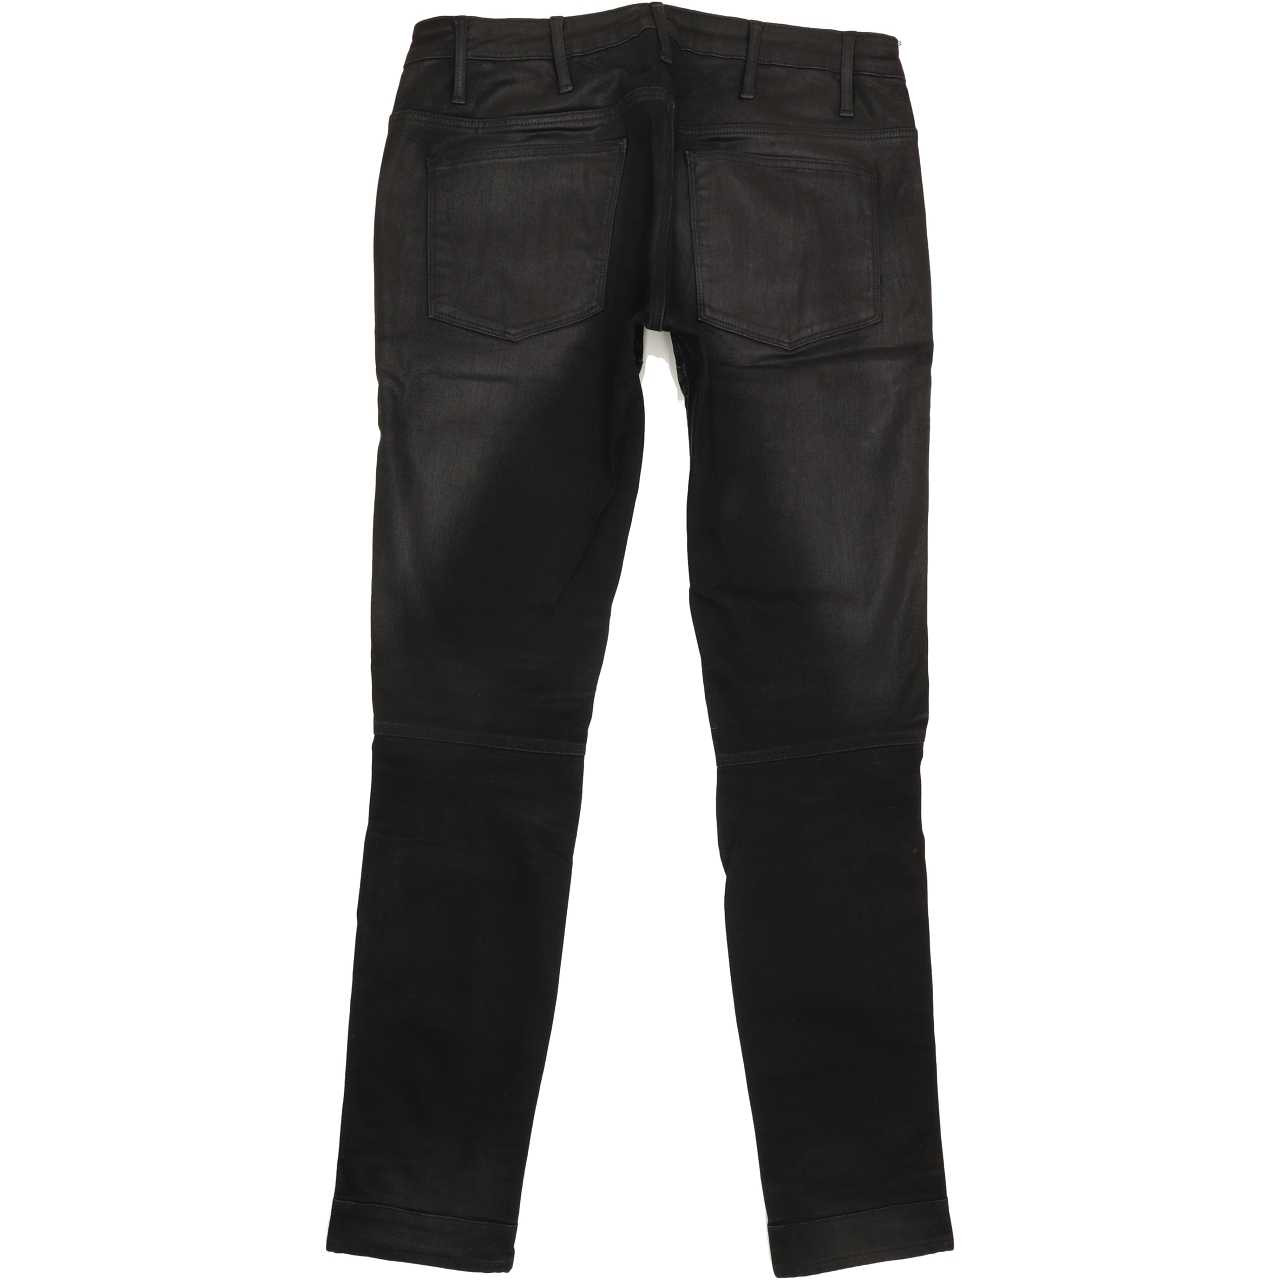 G-Star 5620 Women Black Tapered Slim Stretch Jeans W32 L31